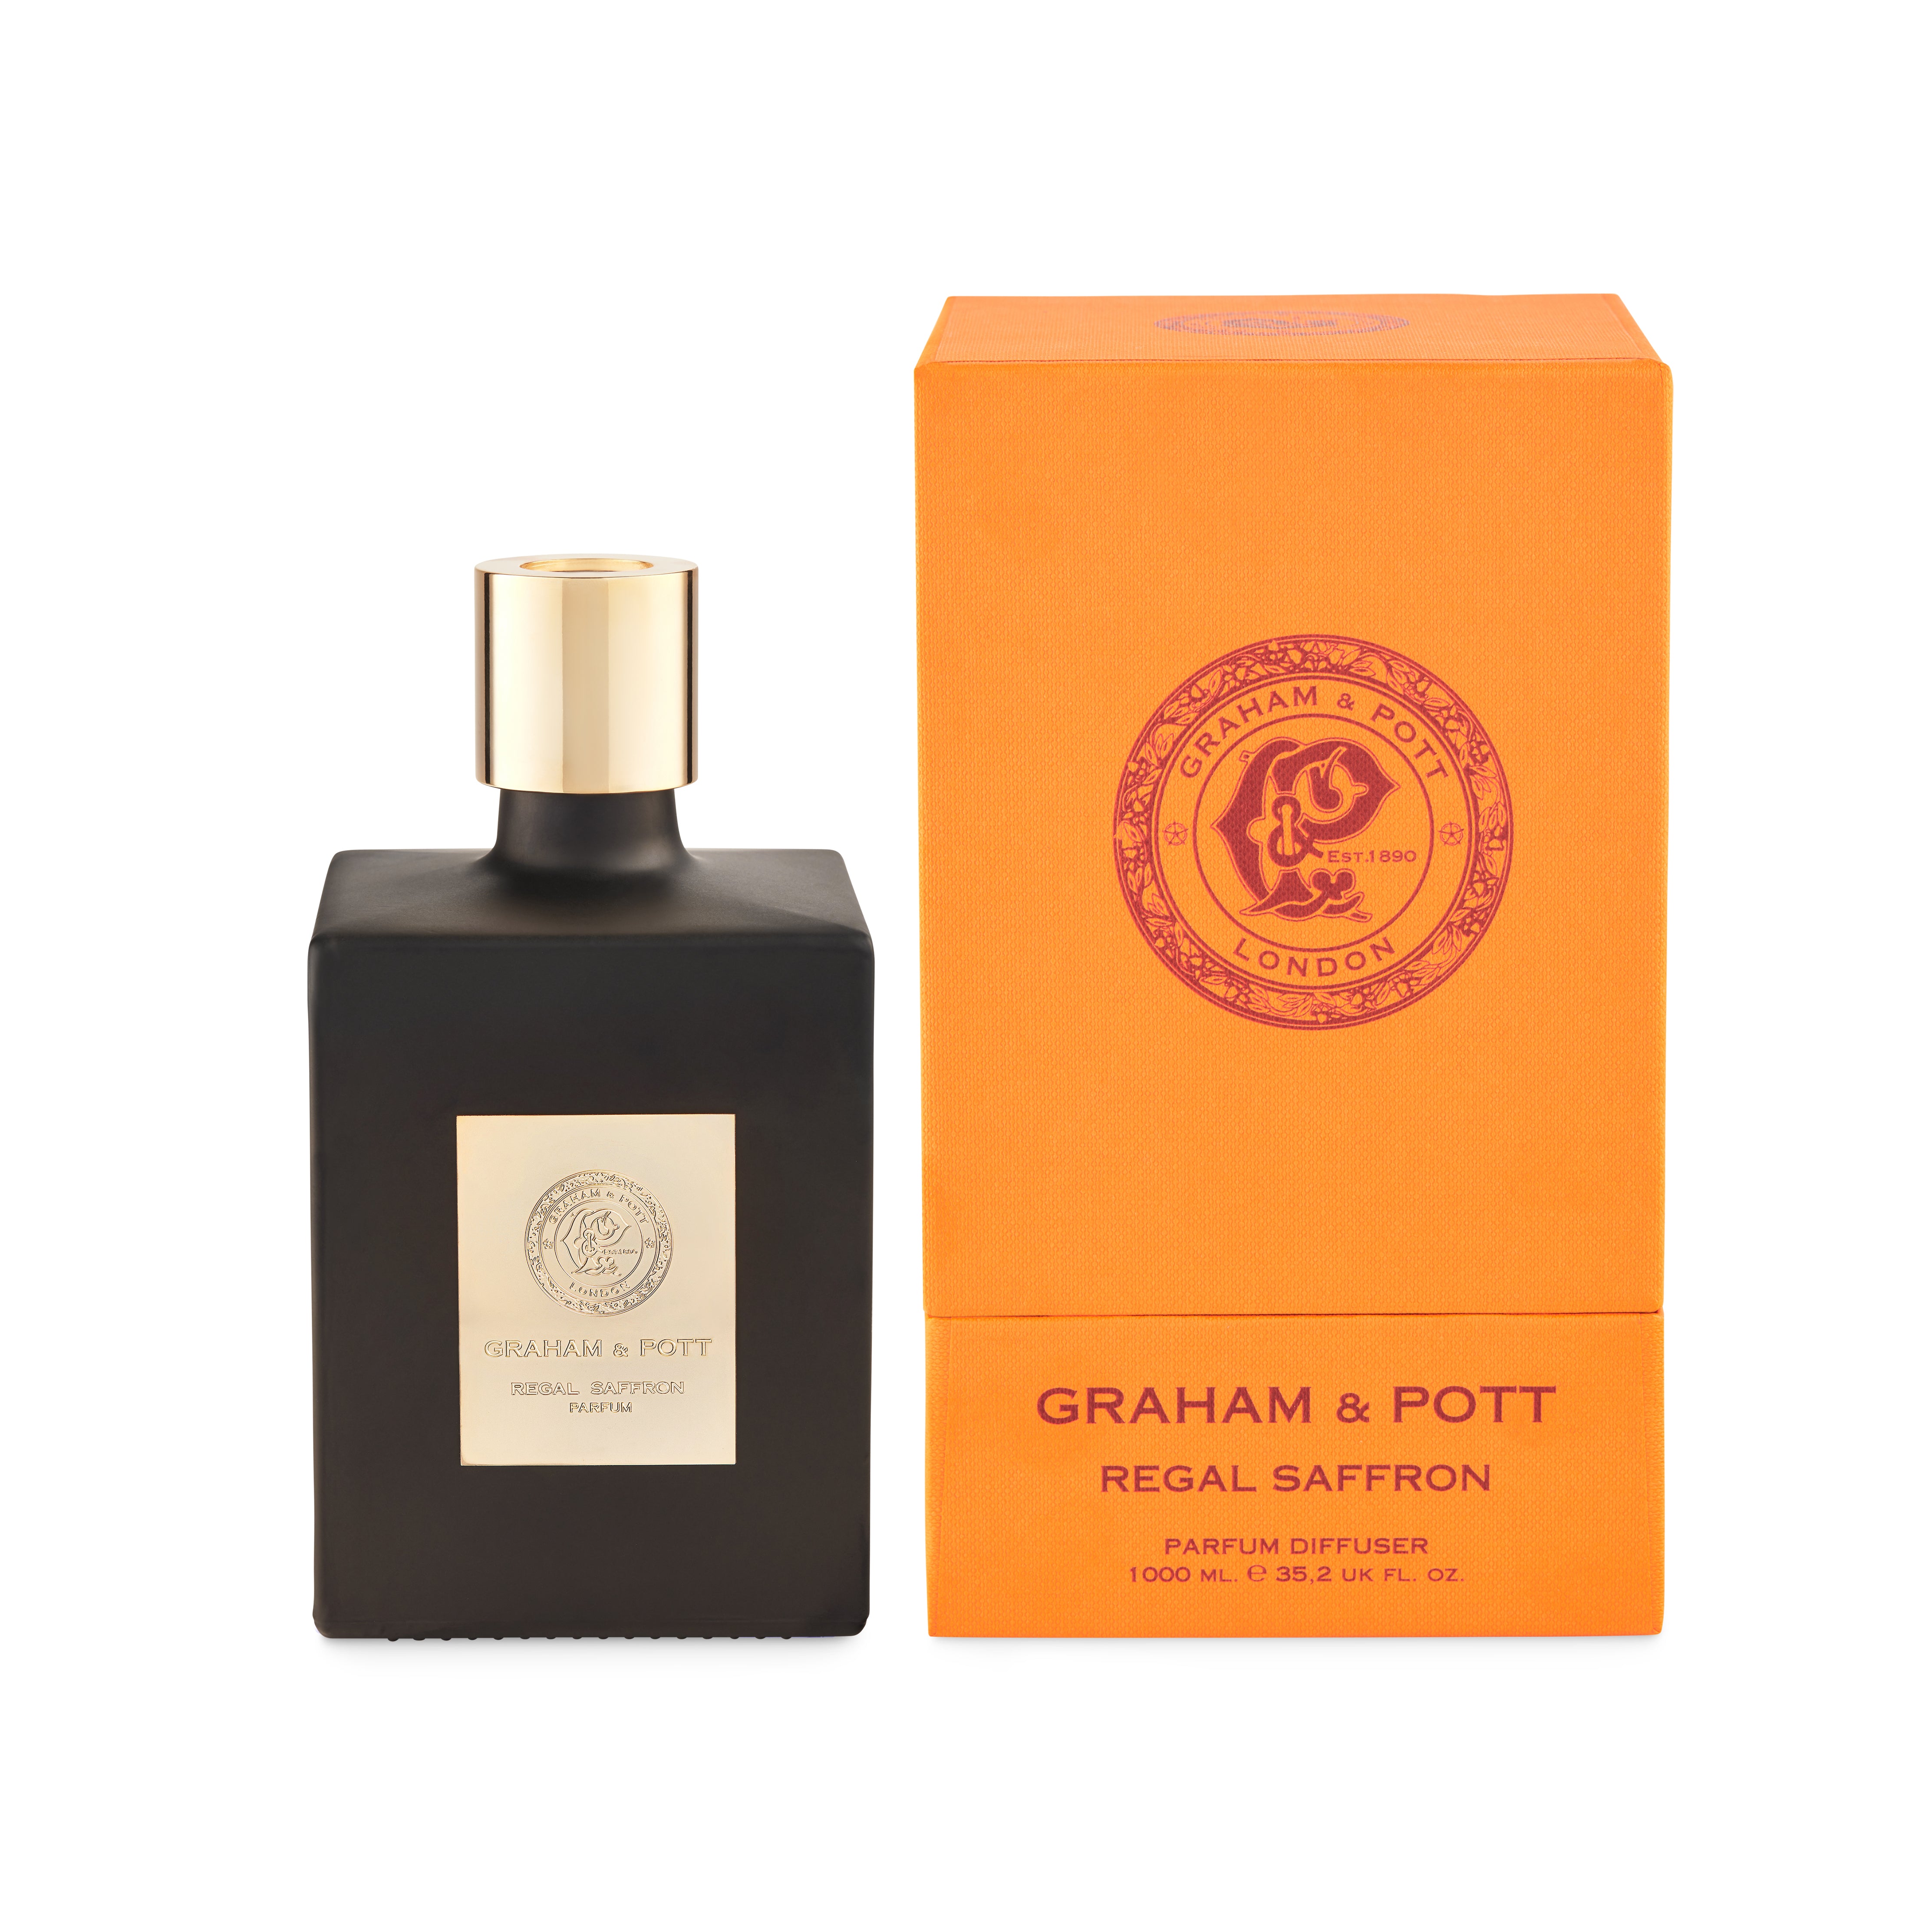 REGAL SAFFRON Parfum Diffuser - GRAHAM & POTT